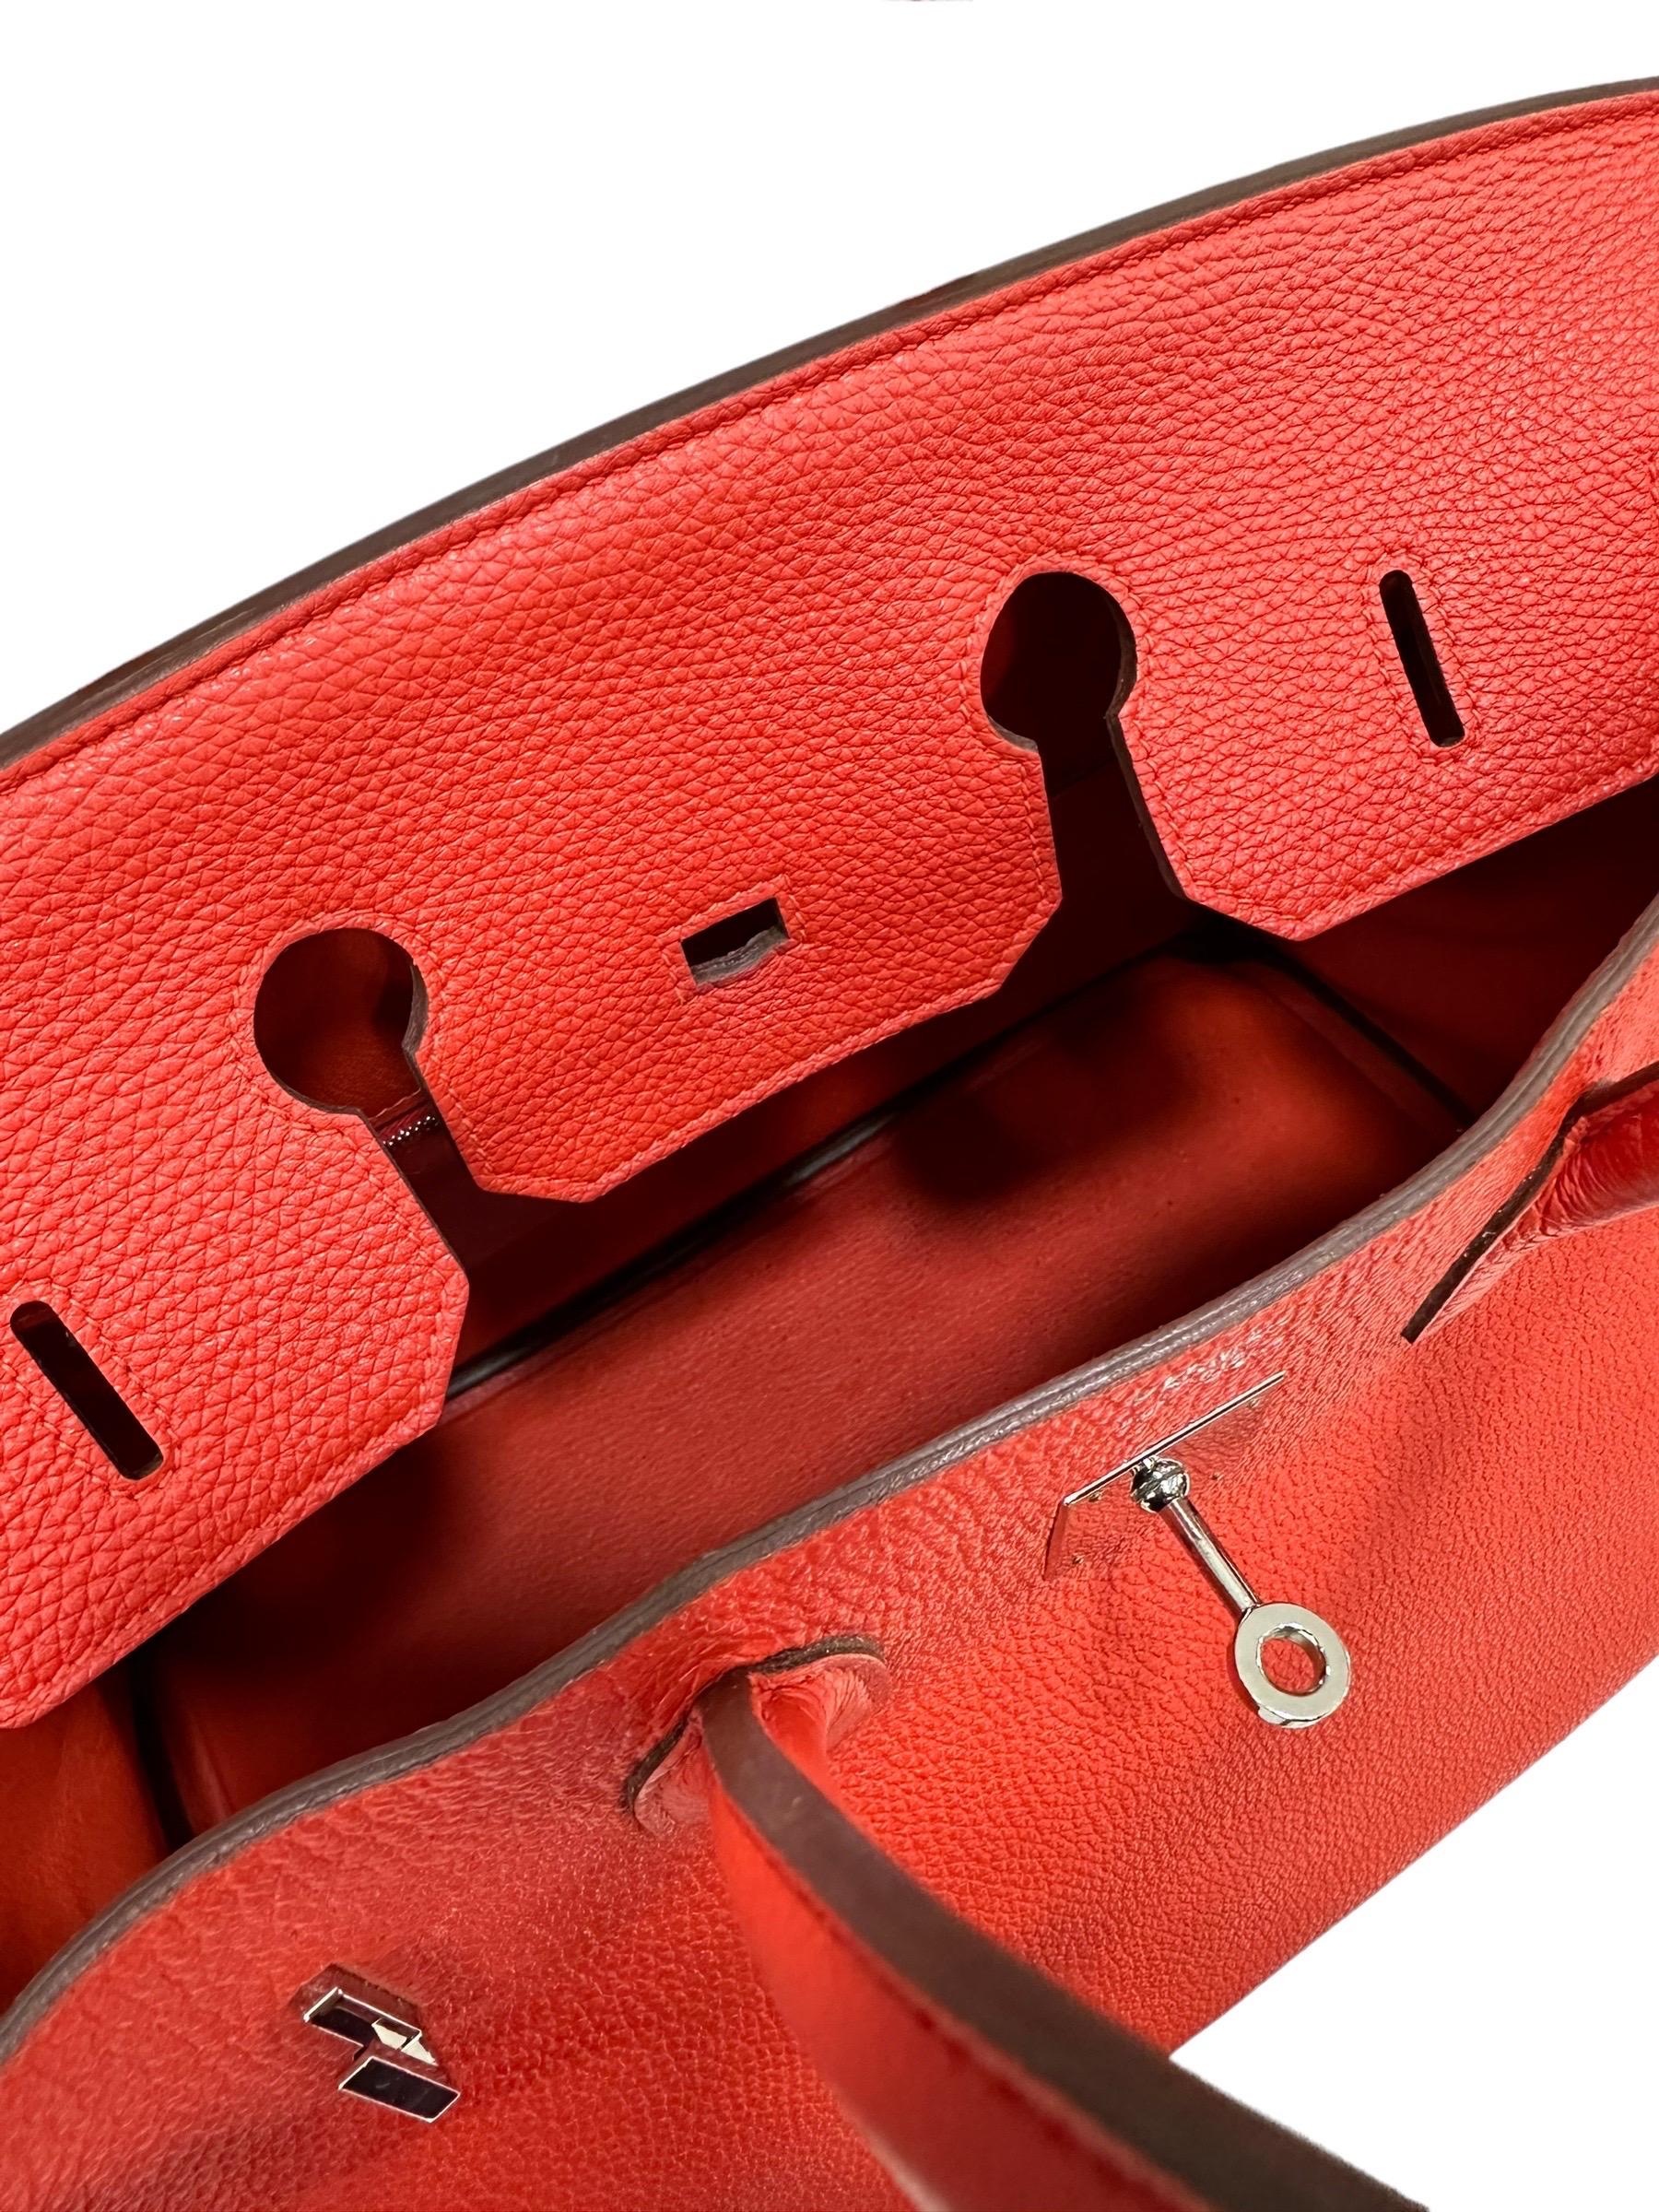 2011 Hermès Birkin 35 Togo Leather Rouge Capucine Top Handle Bag For Sale 1